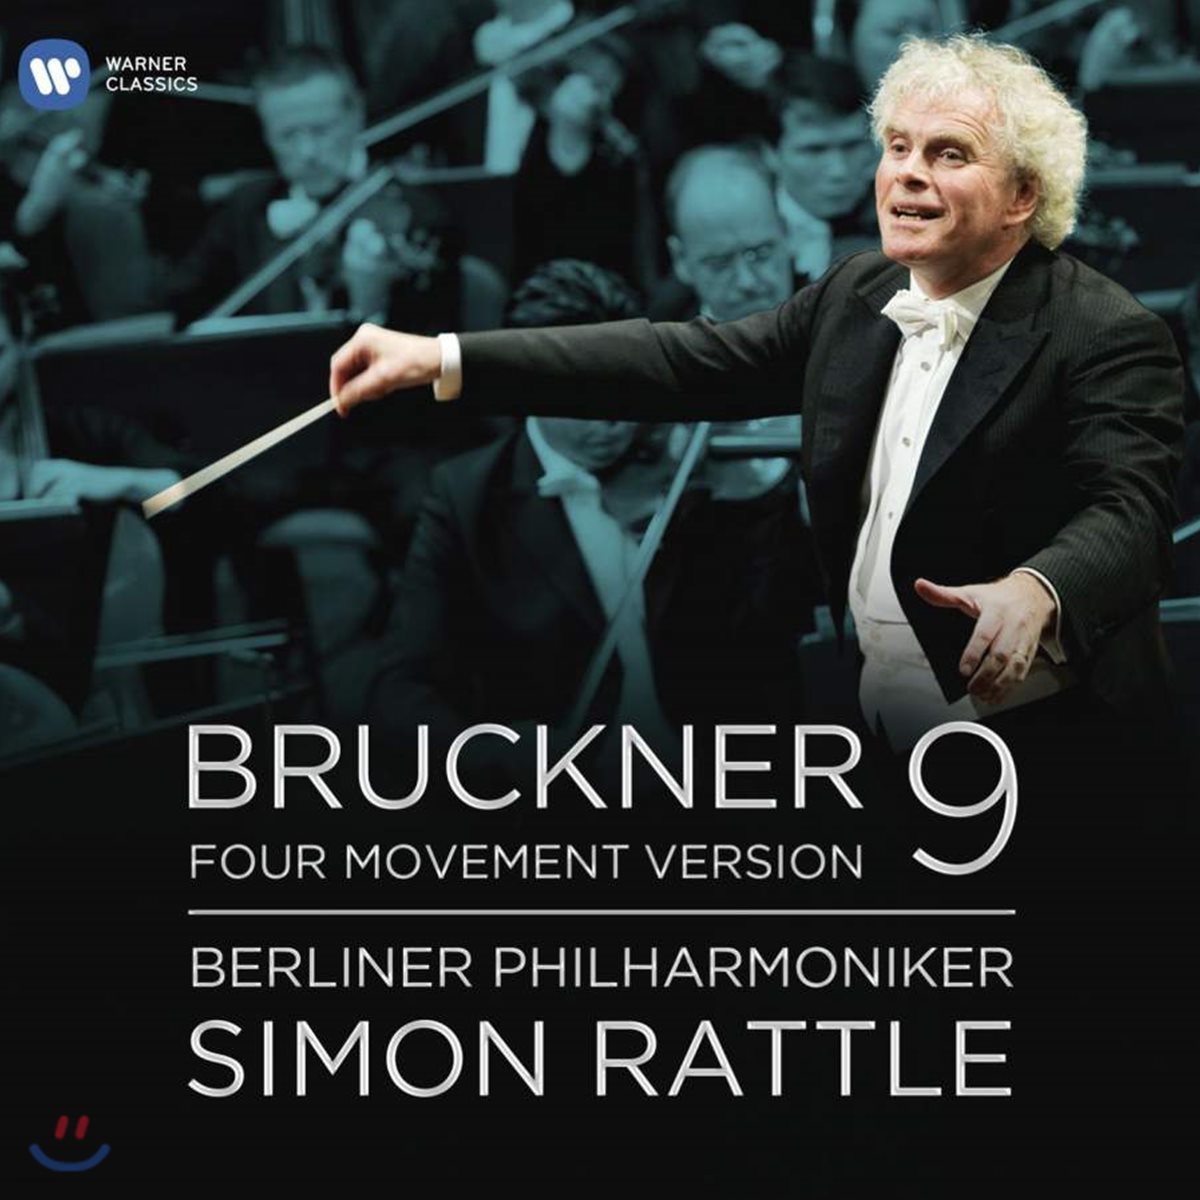 Simon Rattle 브루크너: 교향곡 9번 - 사이먼 래틀 (Bruckner: Symphony No.9) 